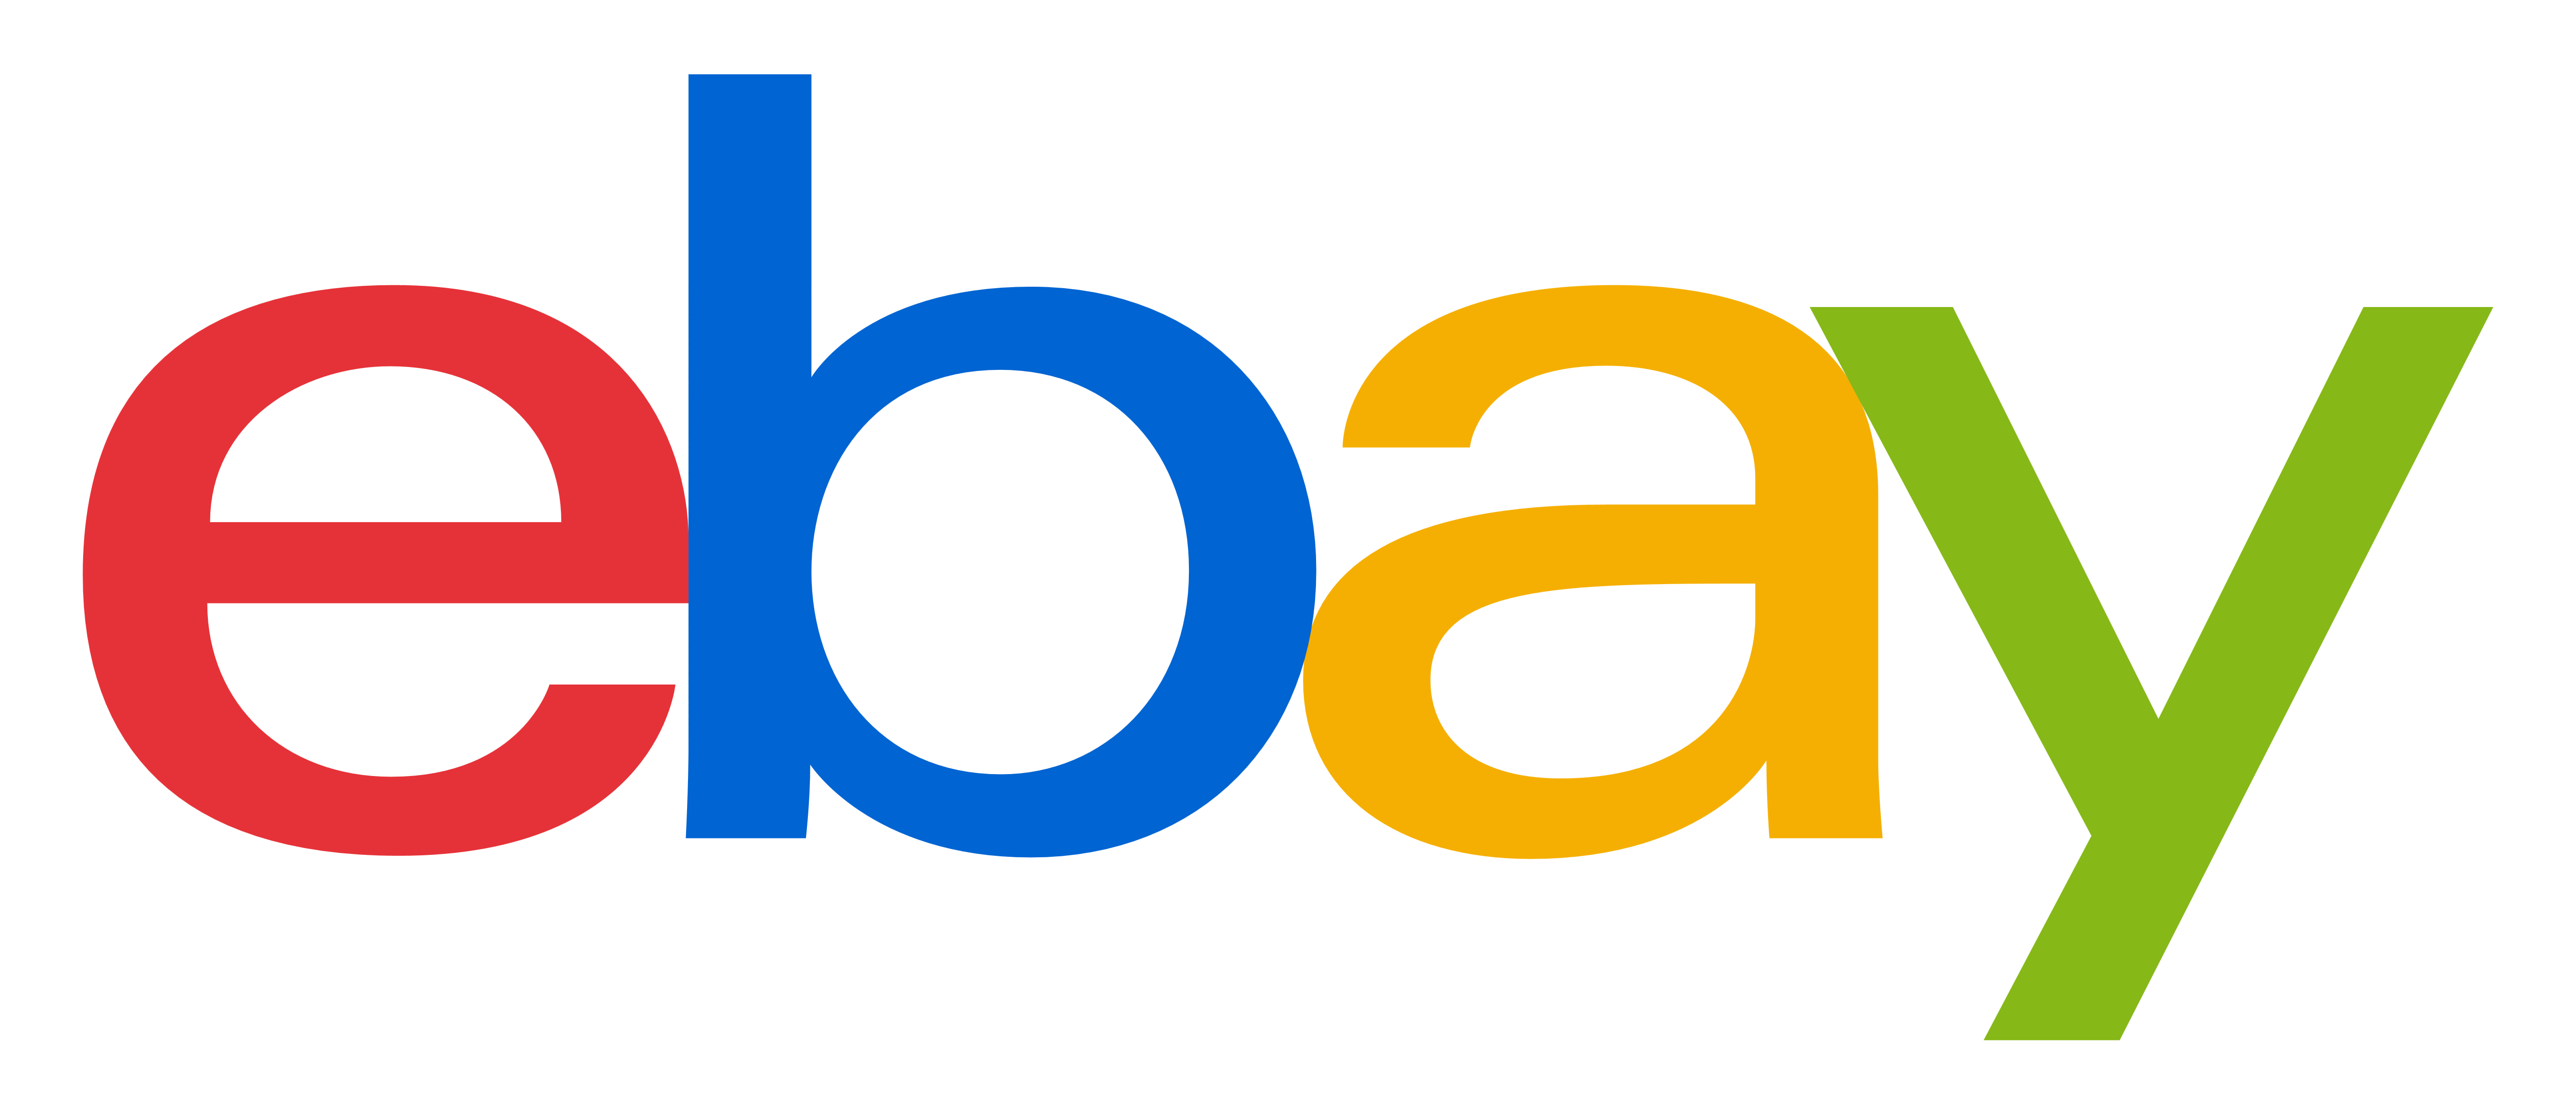 Logo Ebay PNG-PlusPNG.com-227